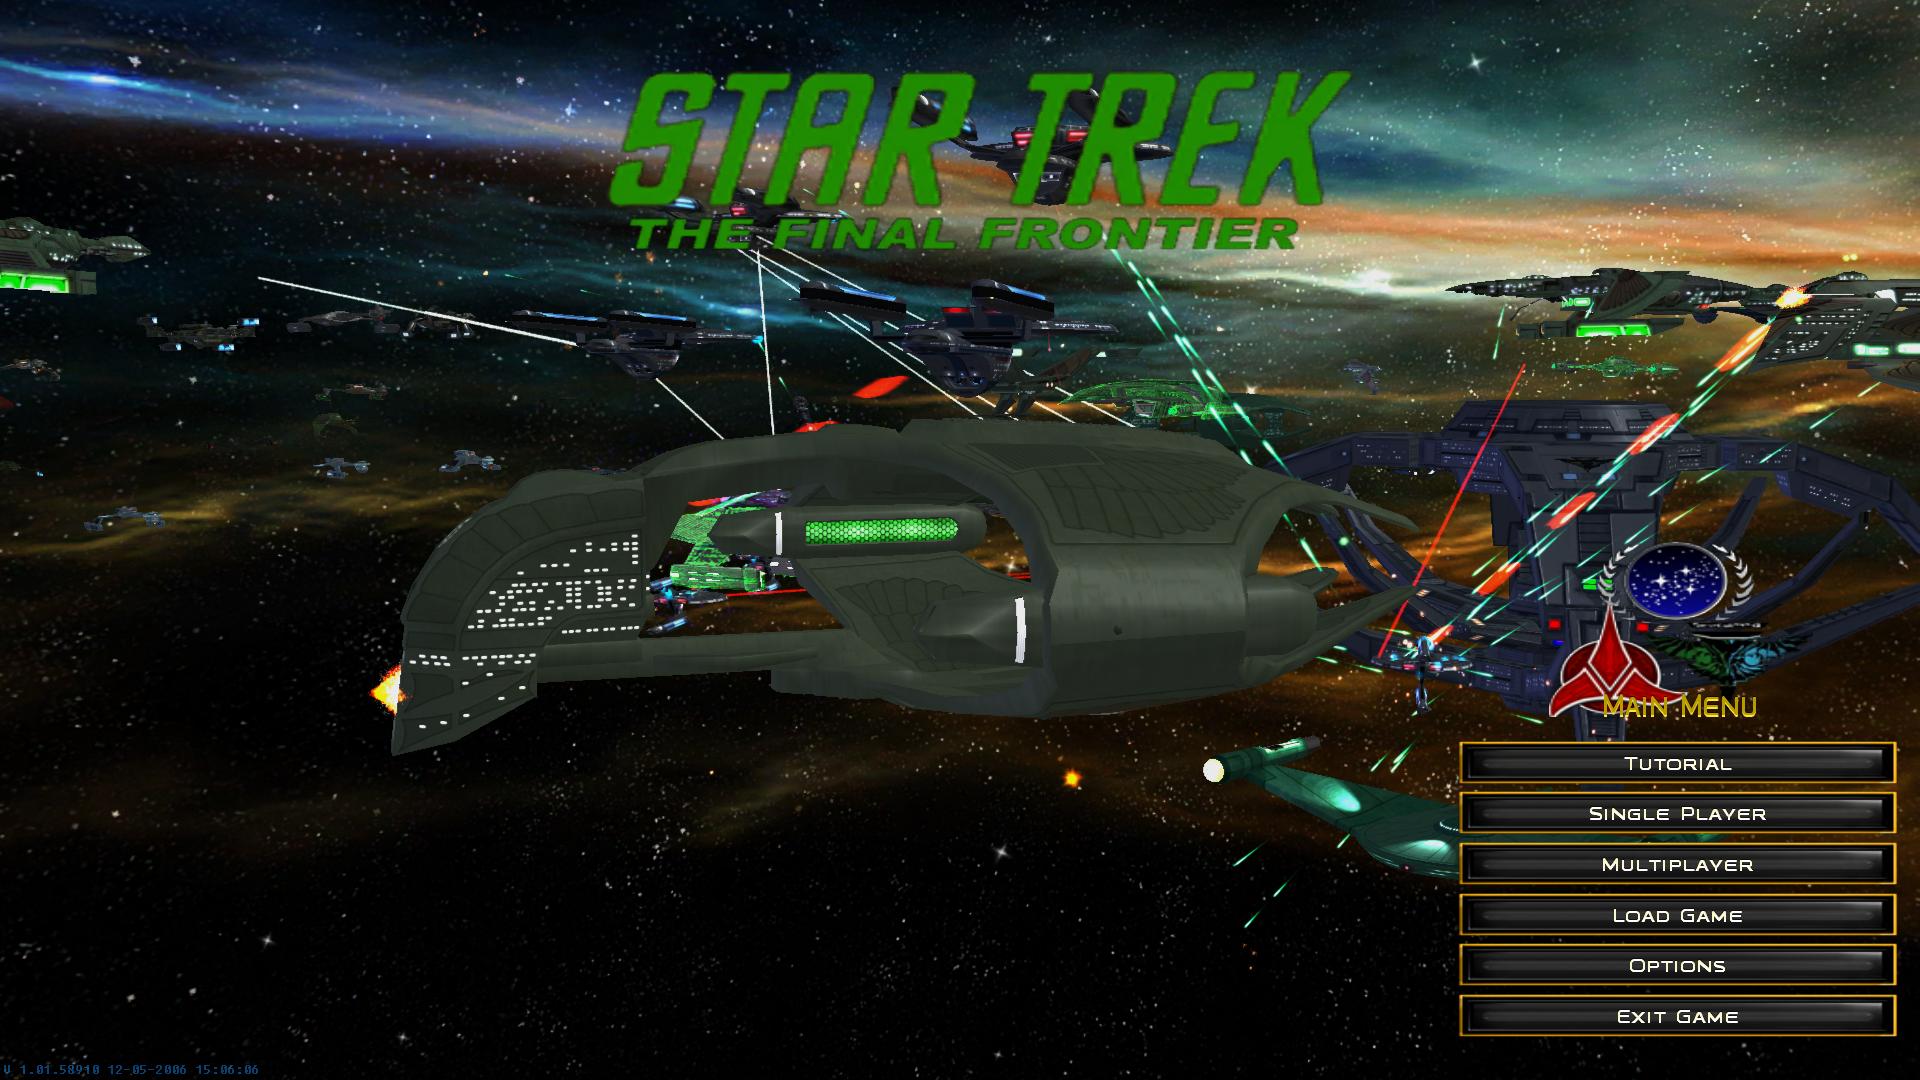 FOC Alliance - Star Trek TOS 3.0 released image - ModDB